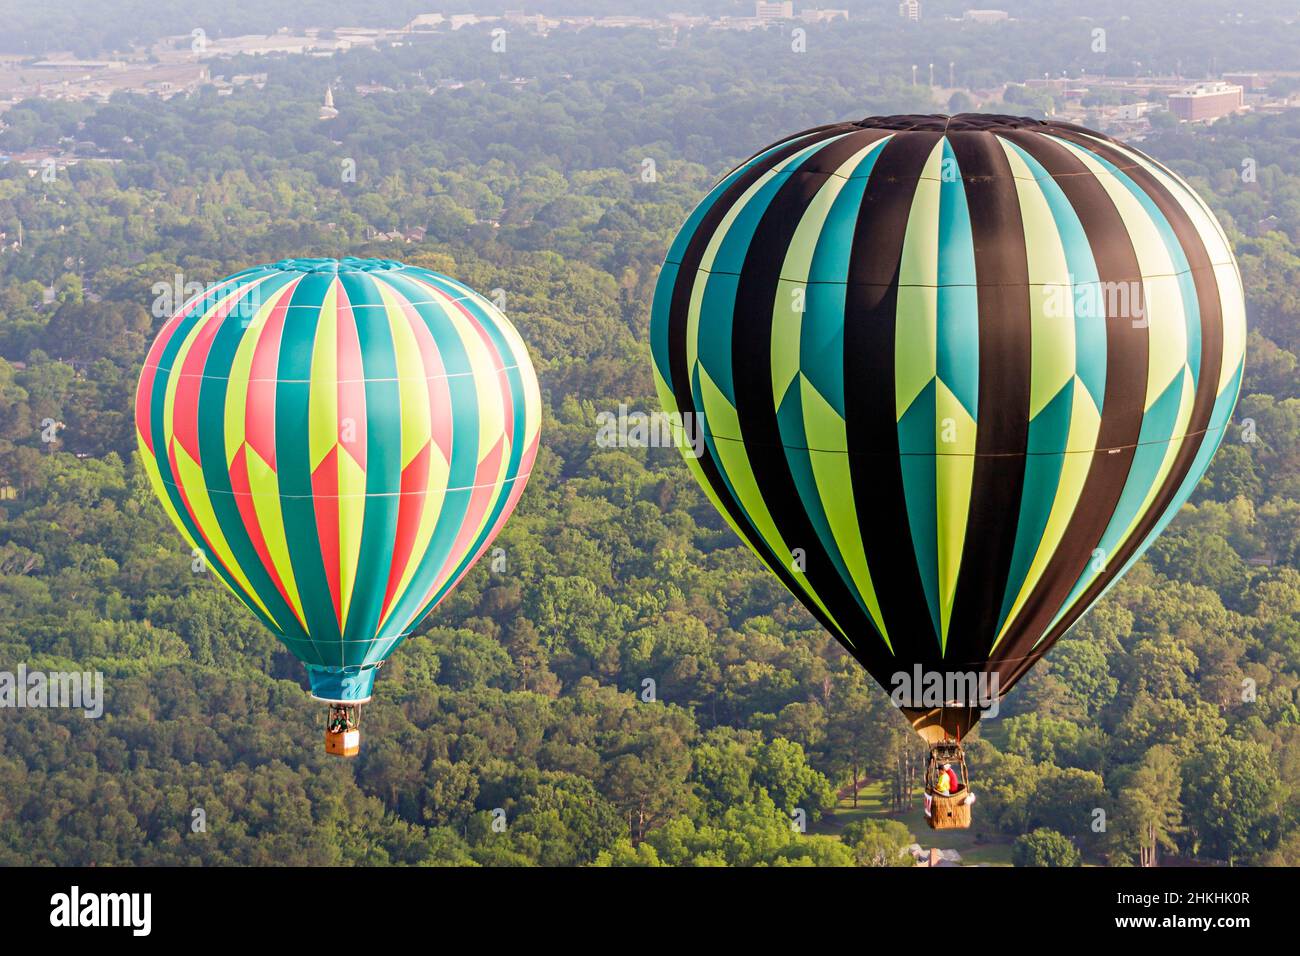 Decatur Alabama, point Mallard Park, Alabama Jubilee Hot Air Balloon Classic, ballons à bord, vue aérienne du dessus Banque D'Images